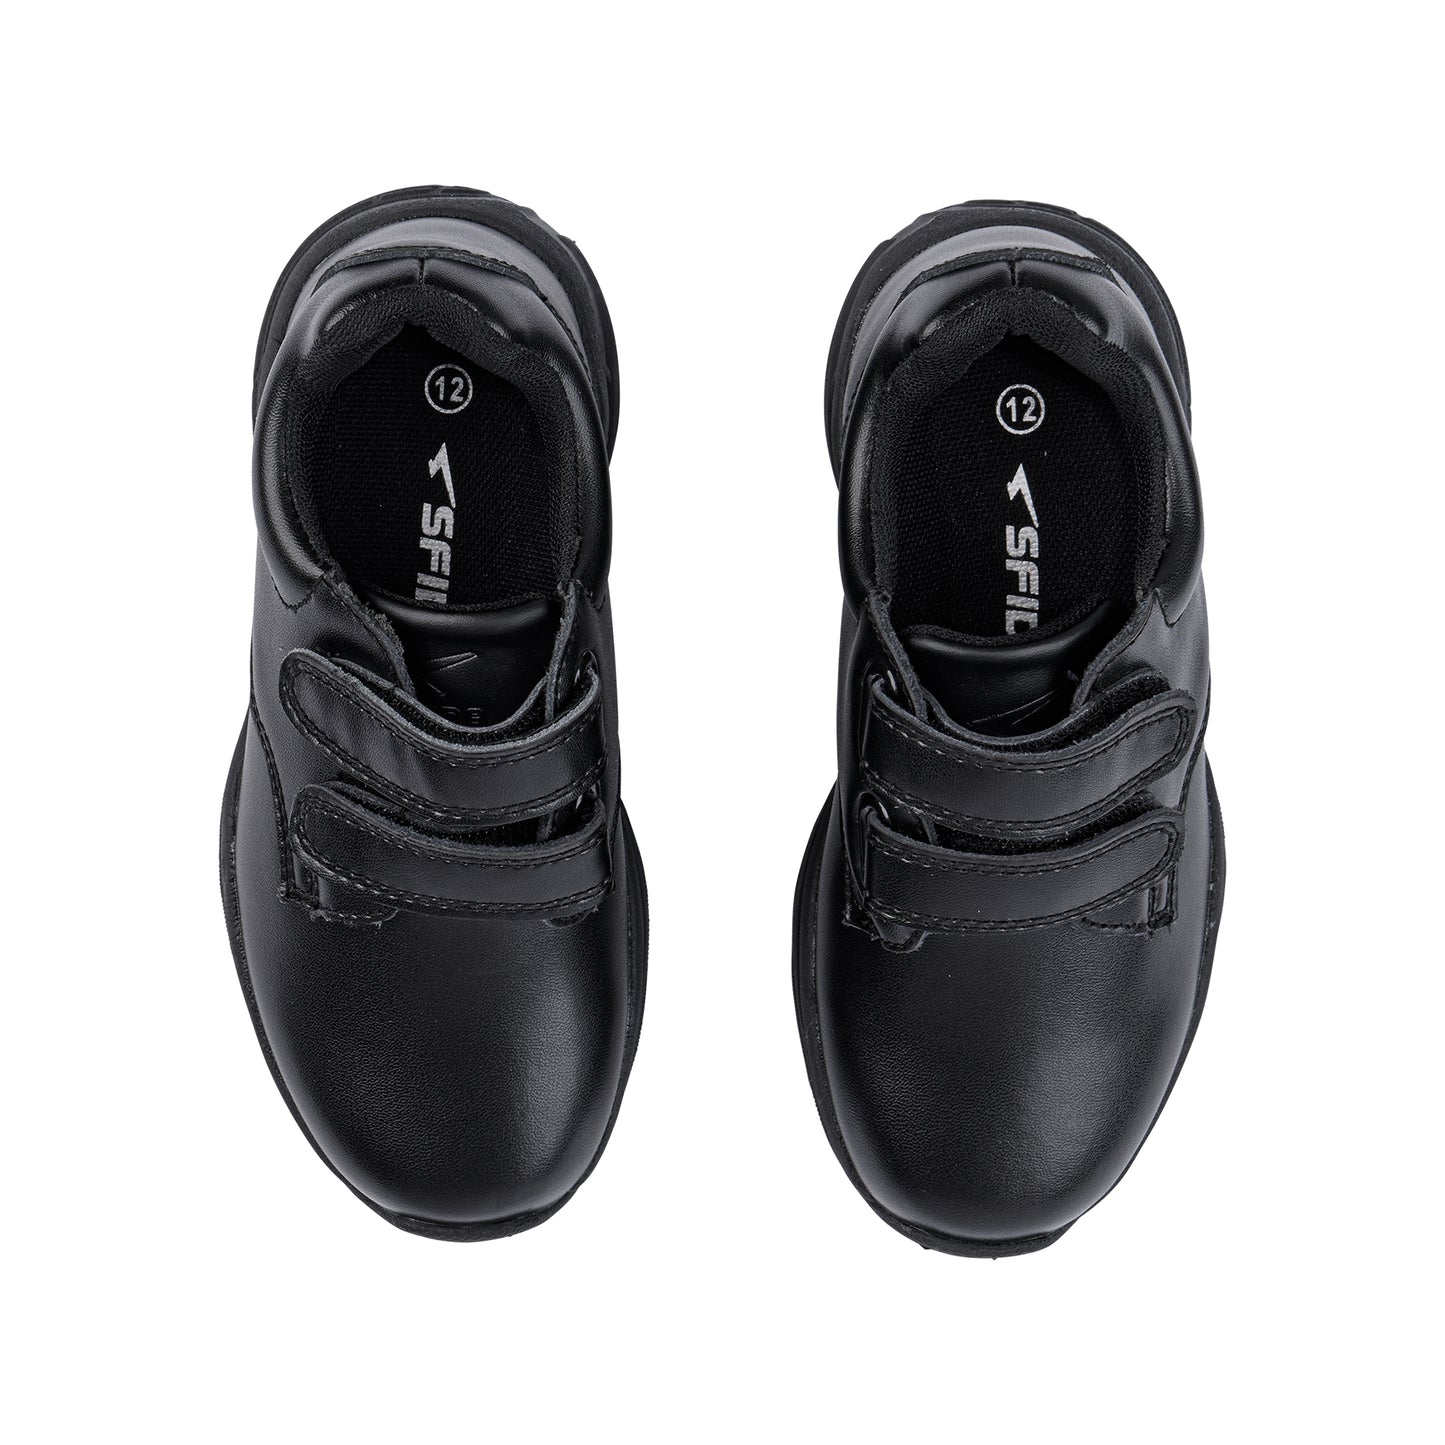 Indie Junior V Strap School Shoes - Black